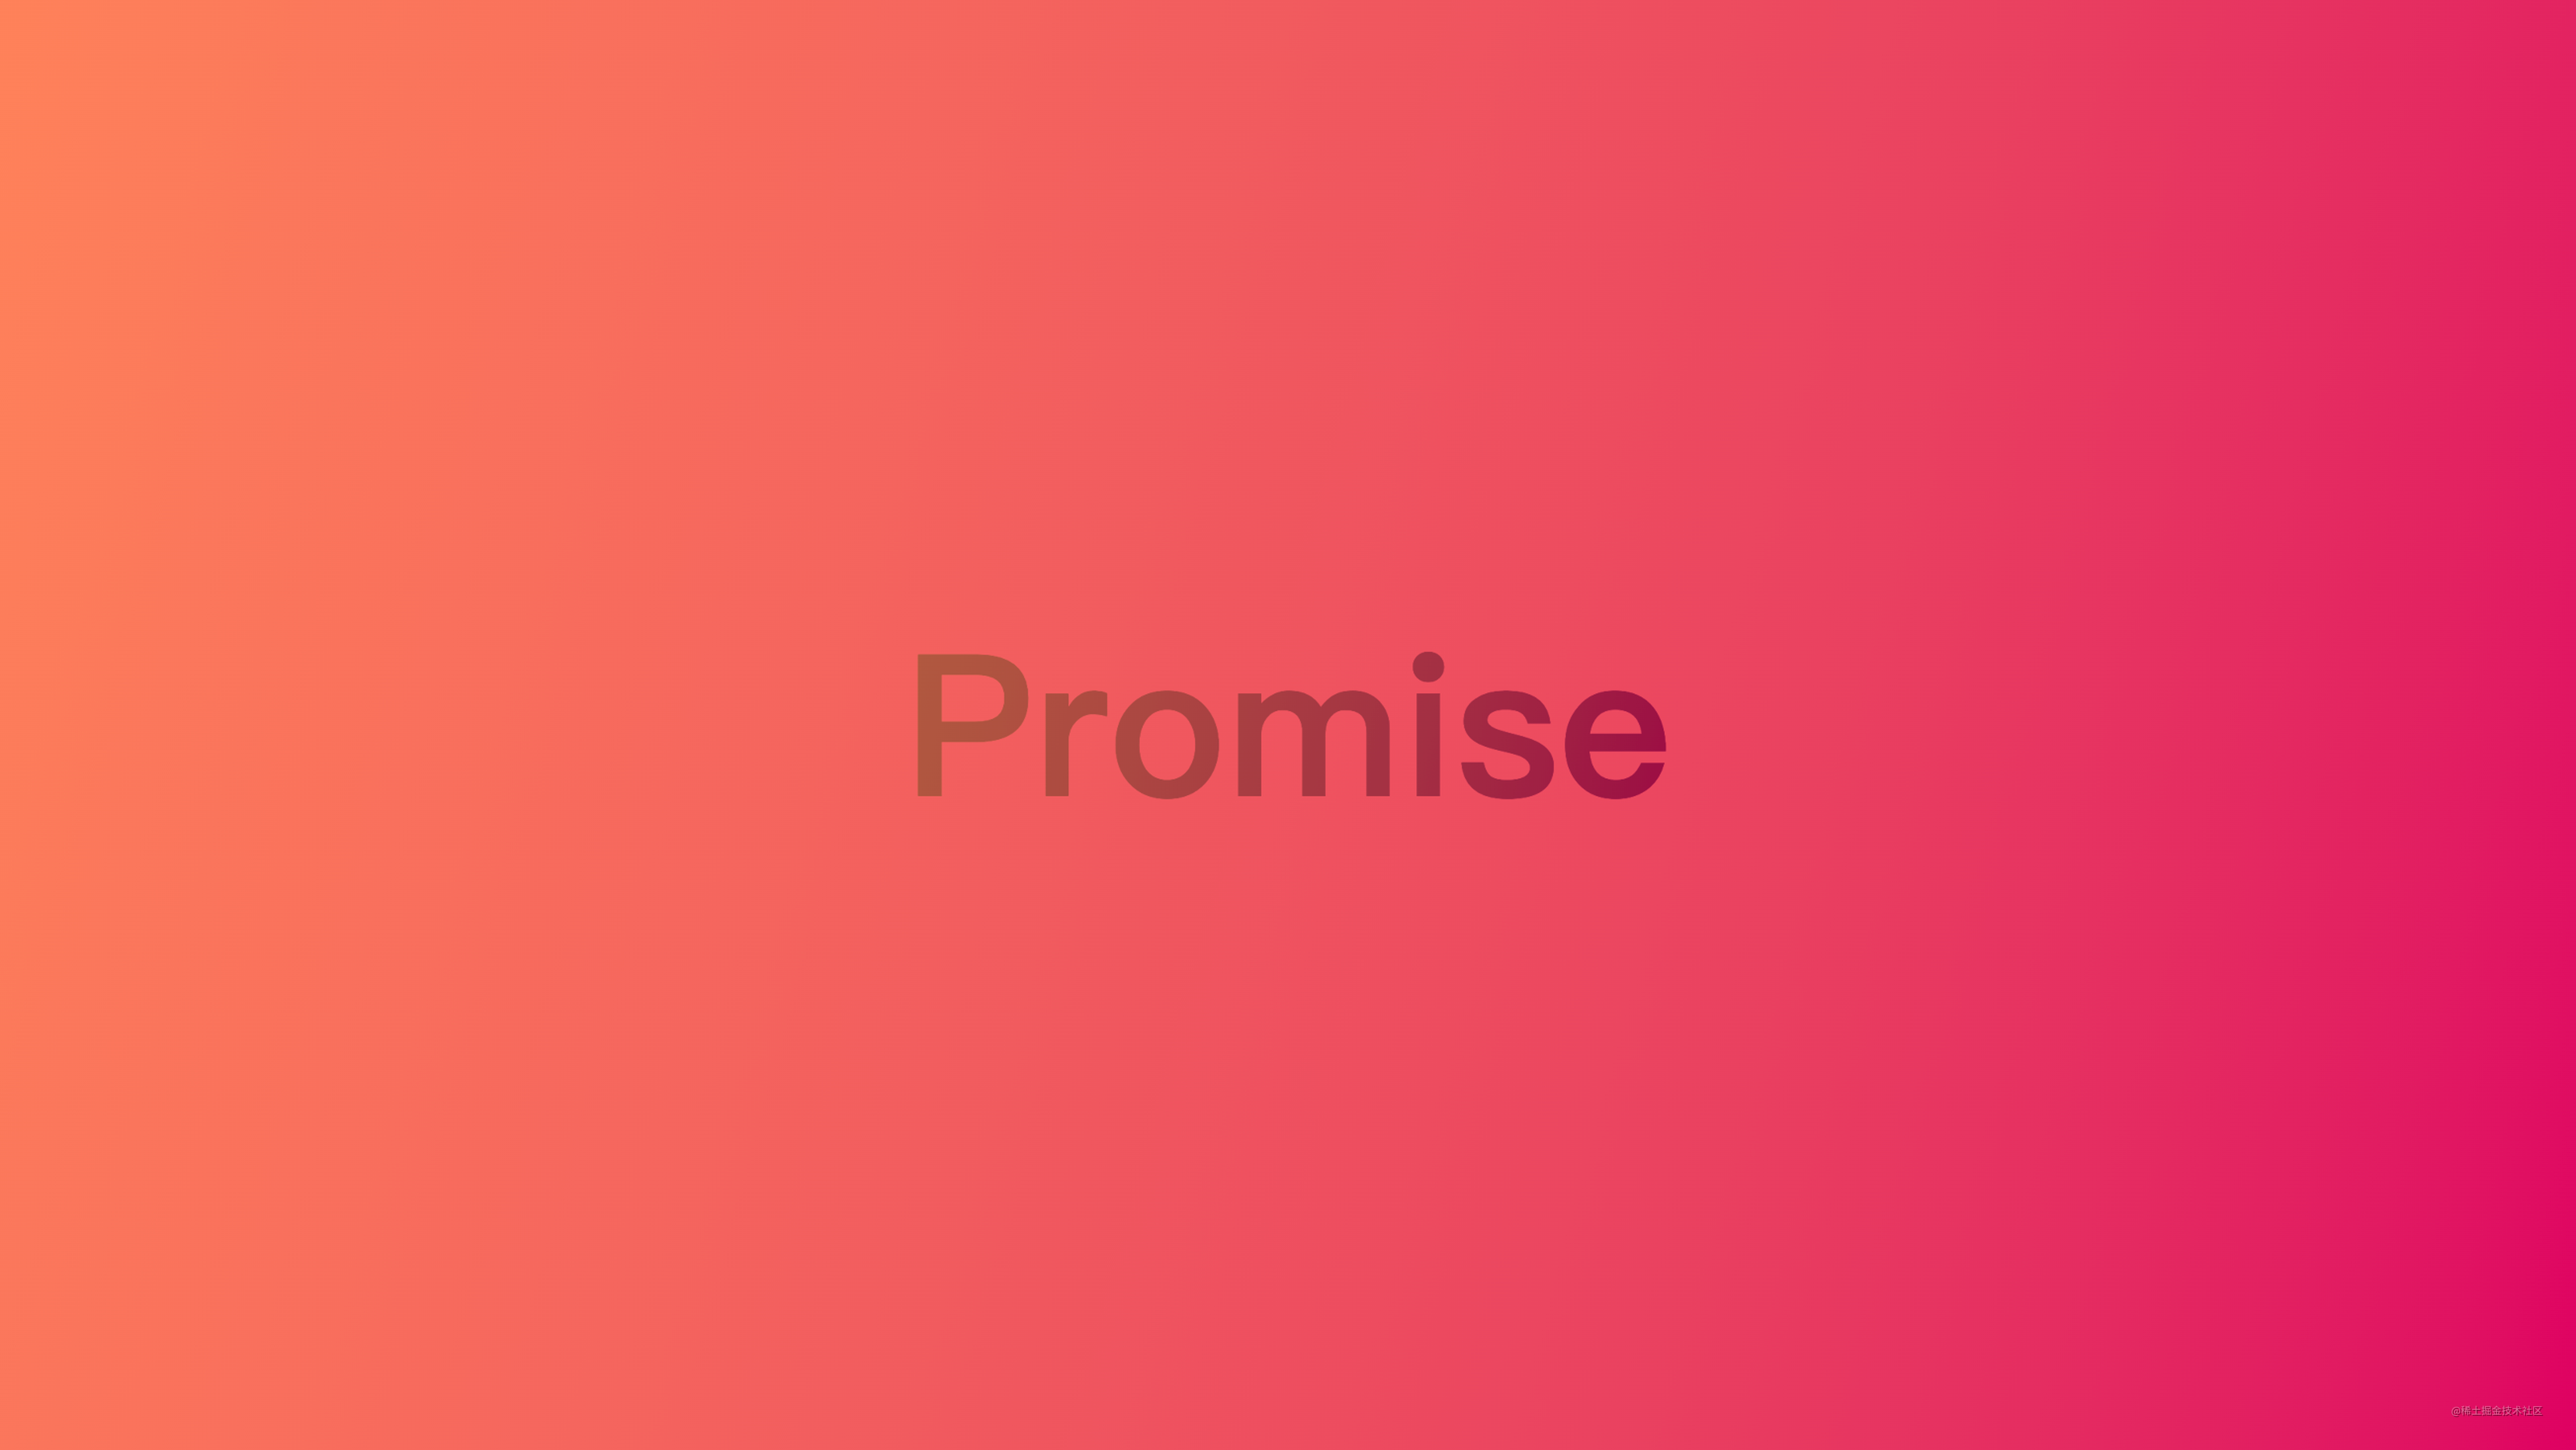 使用 queueMicrotask API 实现符合 Promise/A+ 规范的 Promise